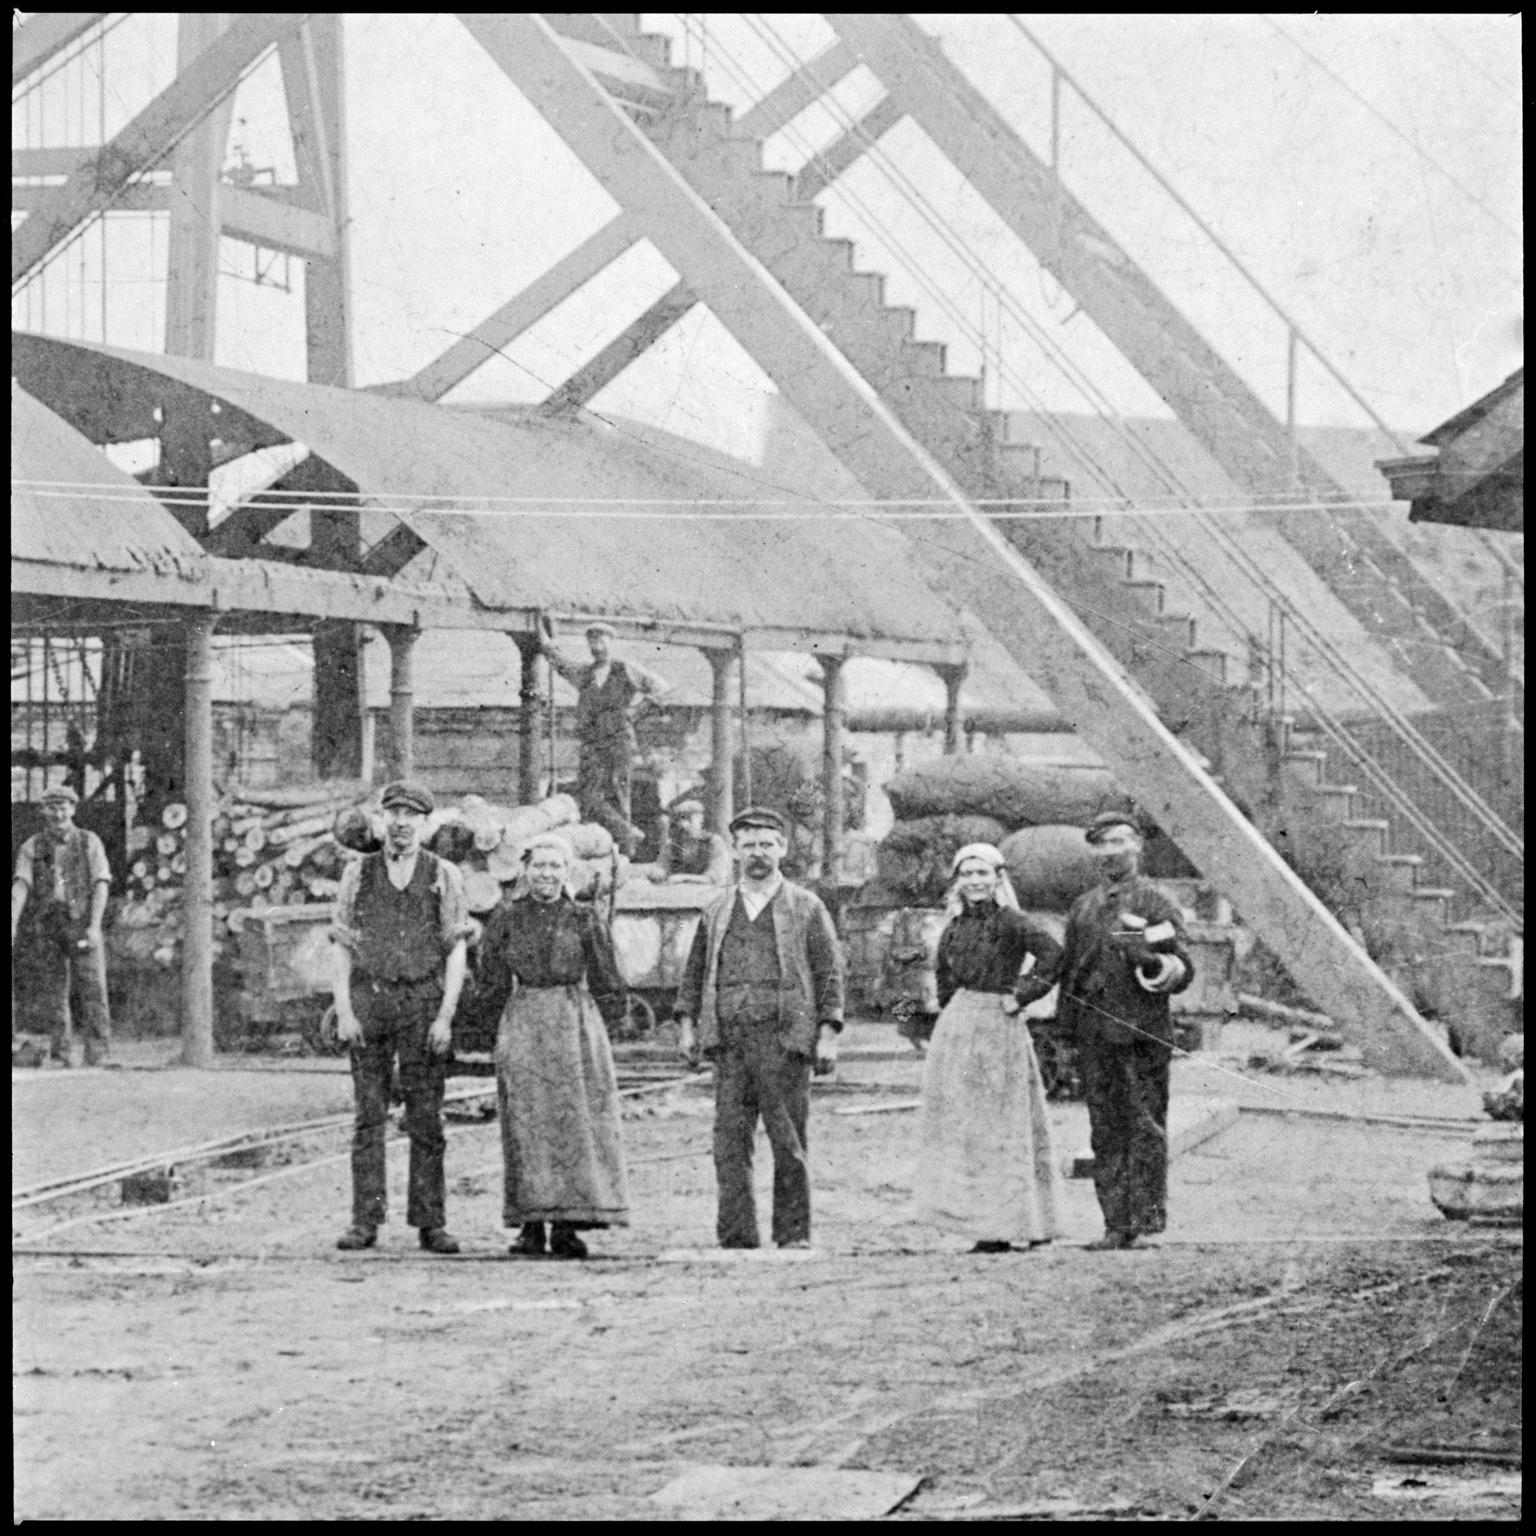 Whitworth Colliery, film negative